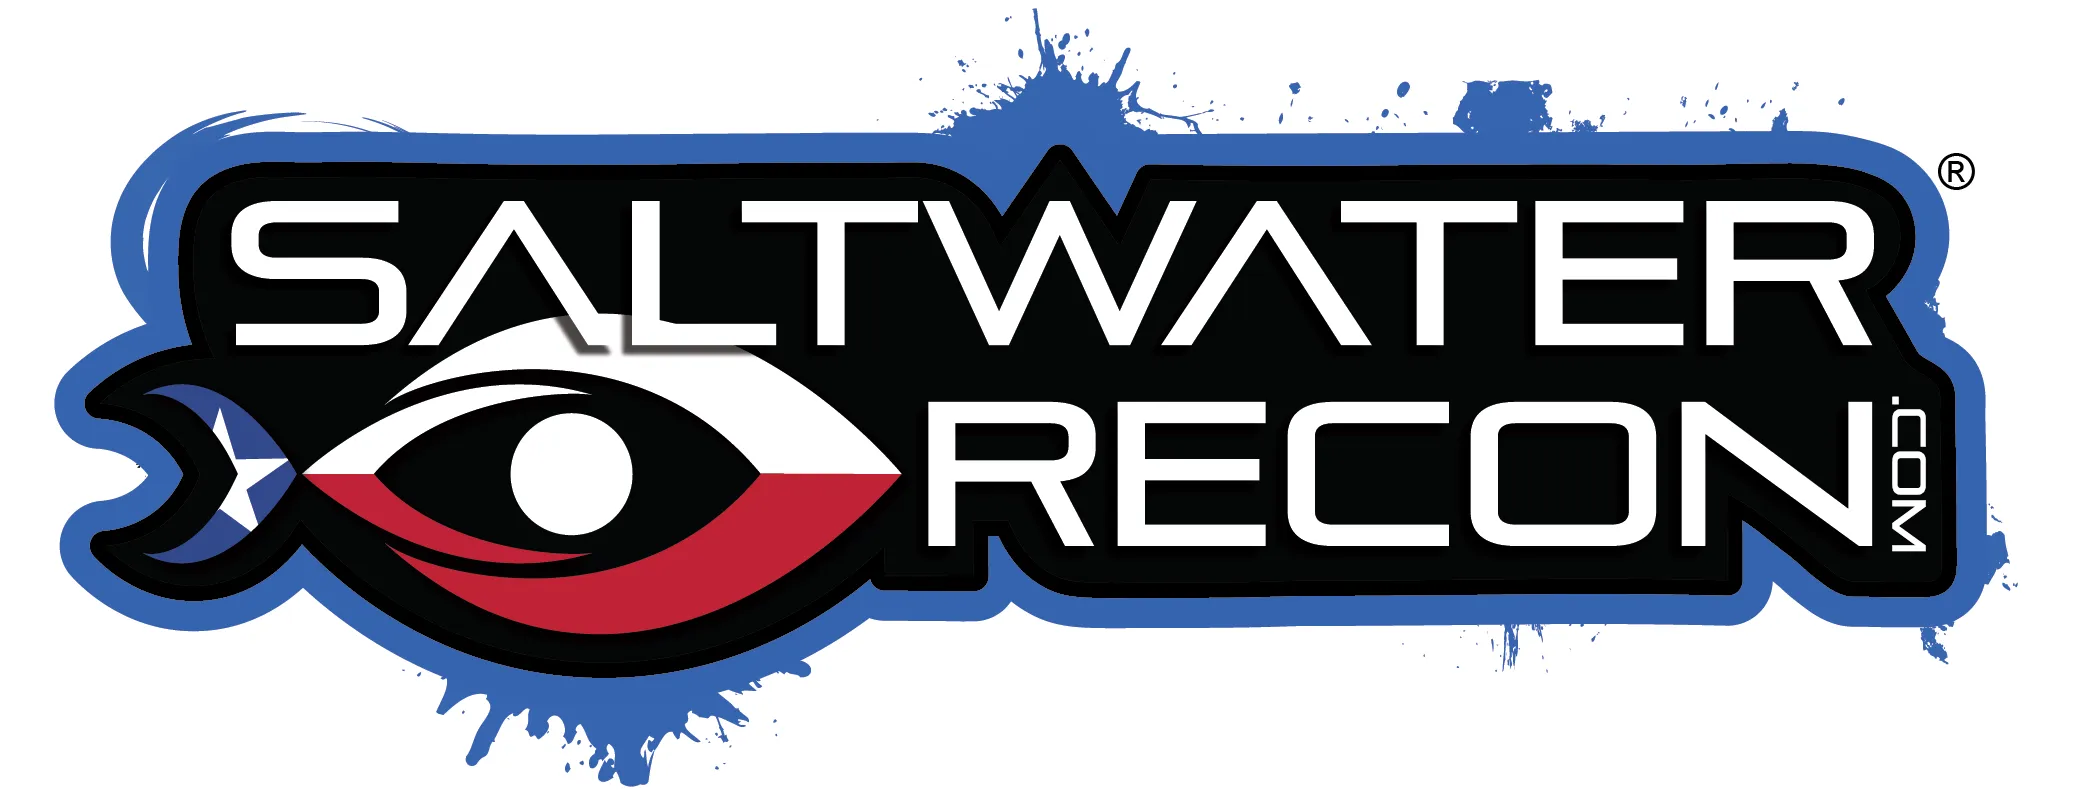 Saltwater Recon